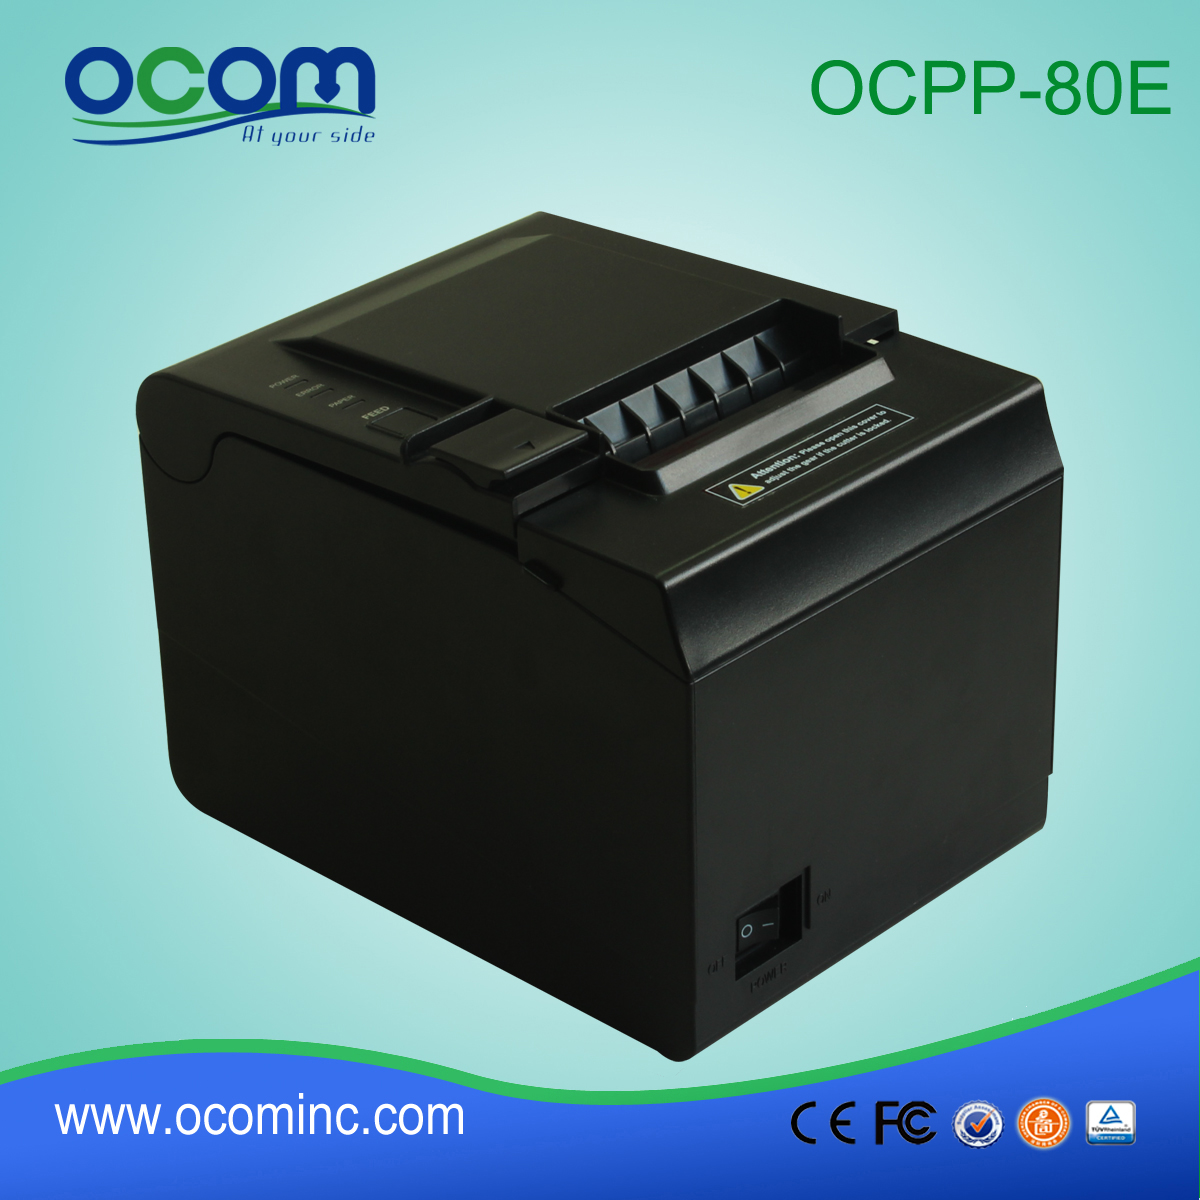 OCPP-80E POS printer thermische ontvangst printer 80mm ondersteunt zwarte vlek detectie